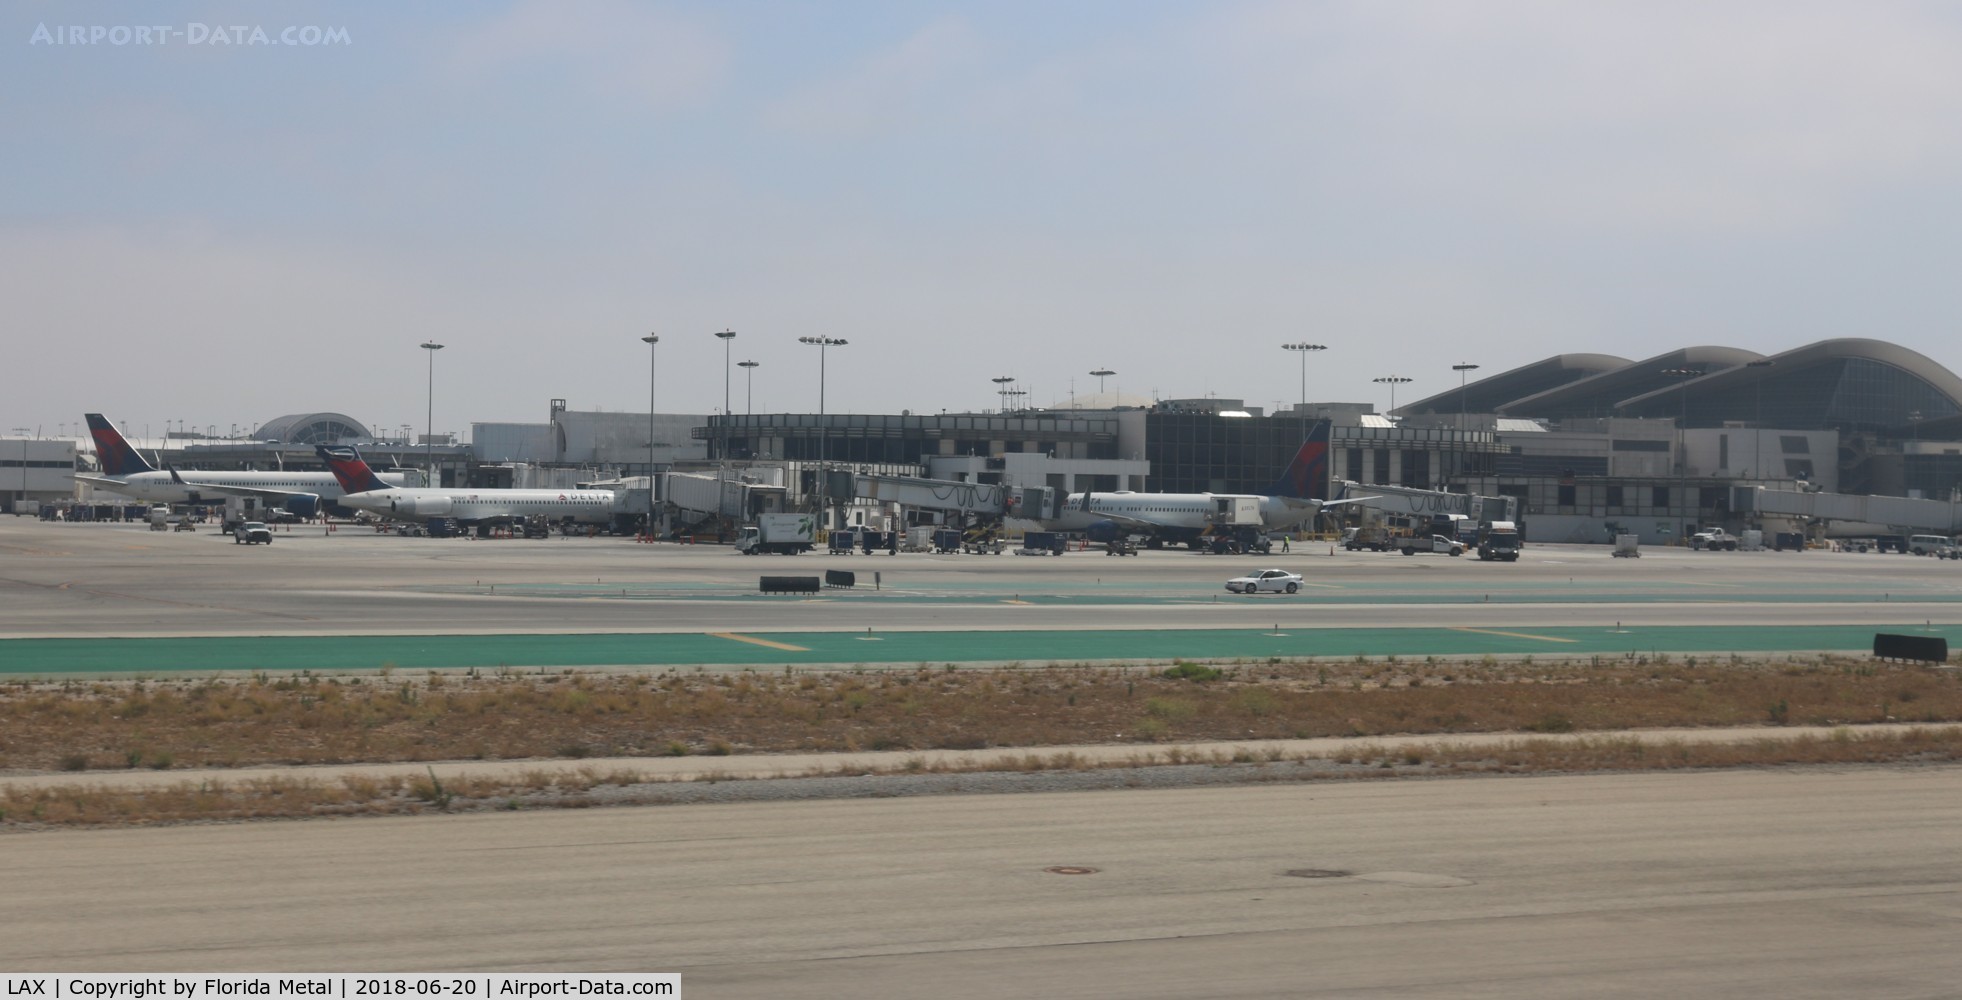 Los Angeles International Airport (LAX) - Departing LAX